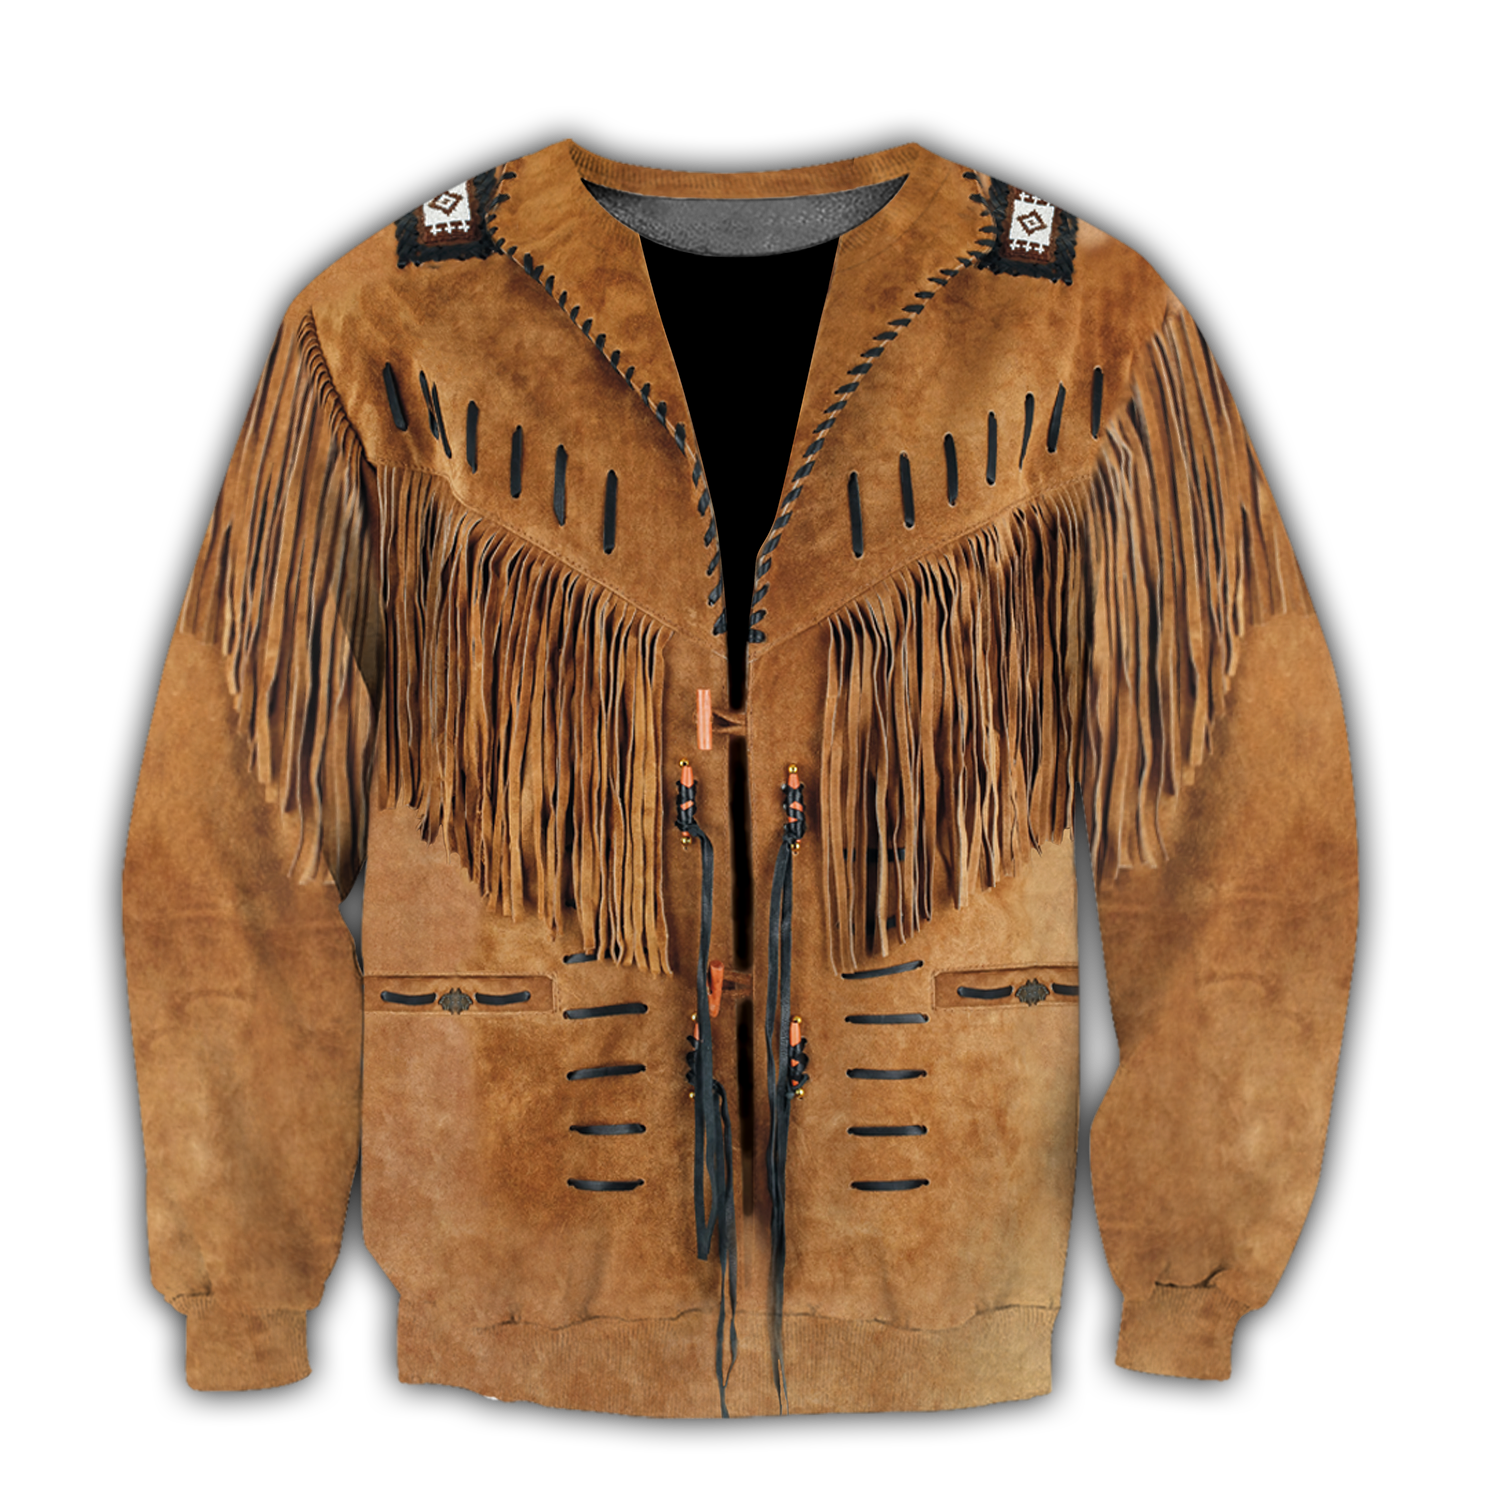 native-american-cowboy-jacket-no14-cosplay-3d-over-printed-unisex-deluxe-sweatshirt